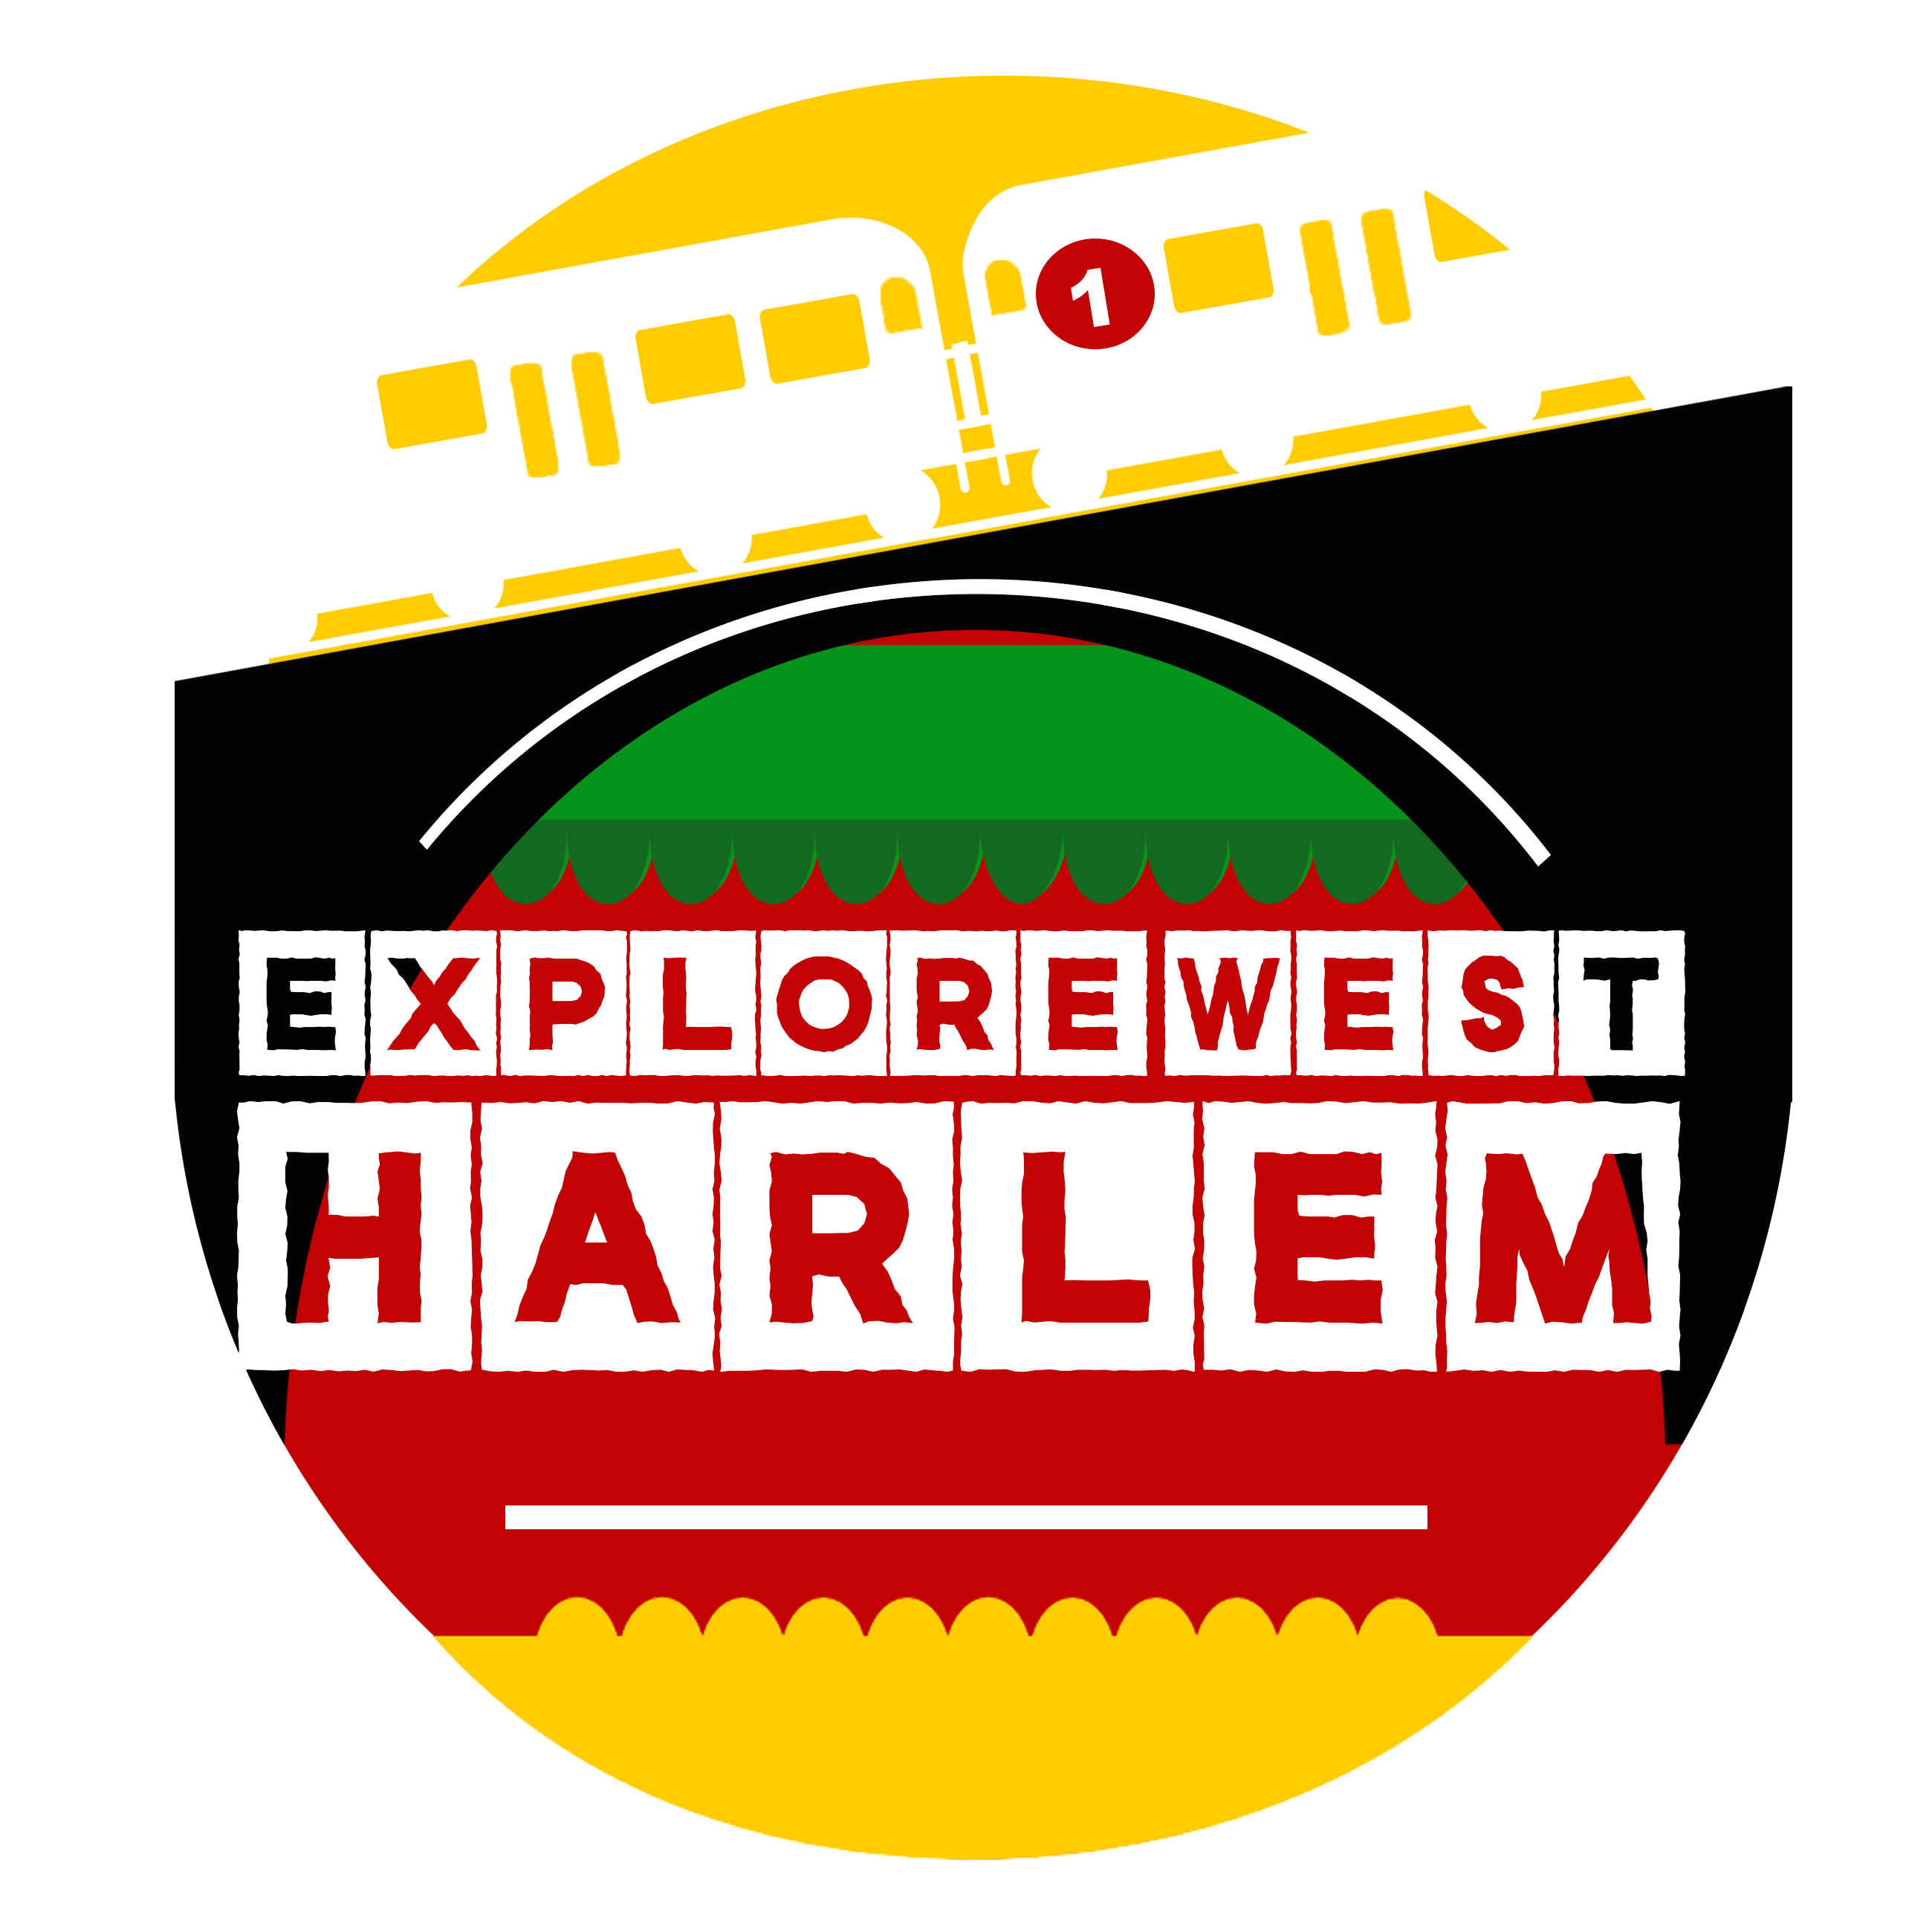 Explore West Harlem